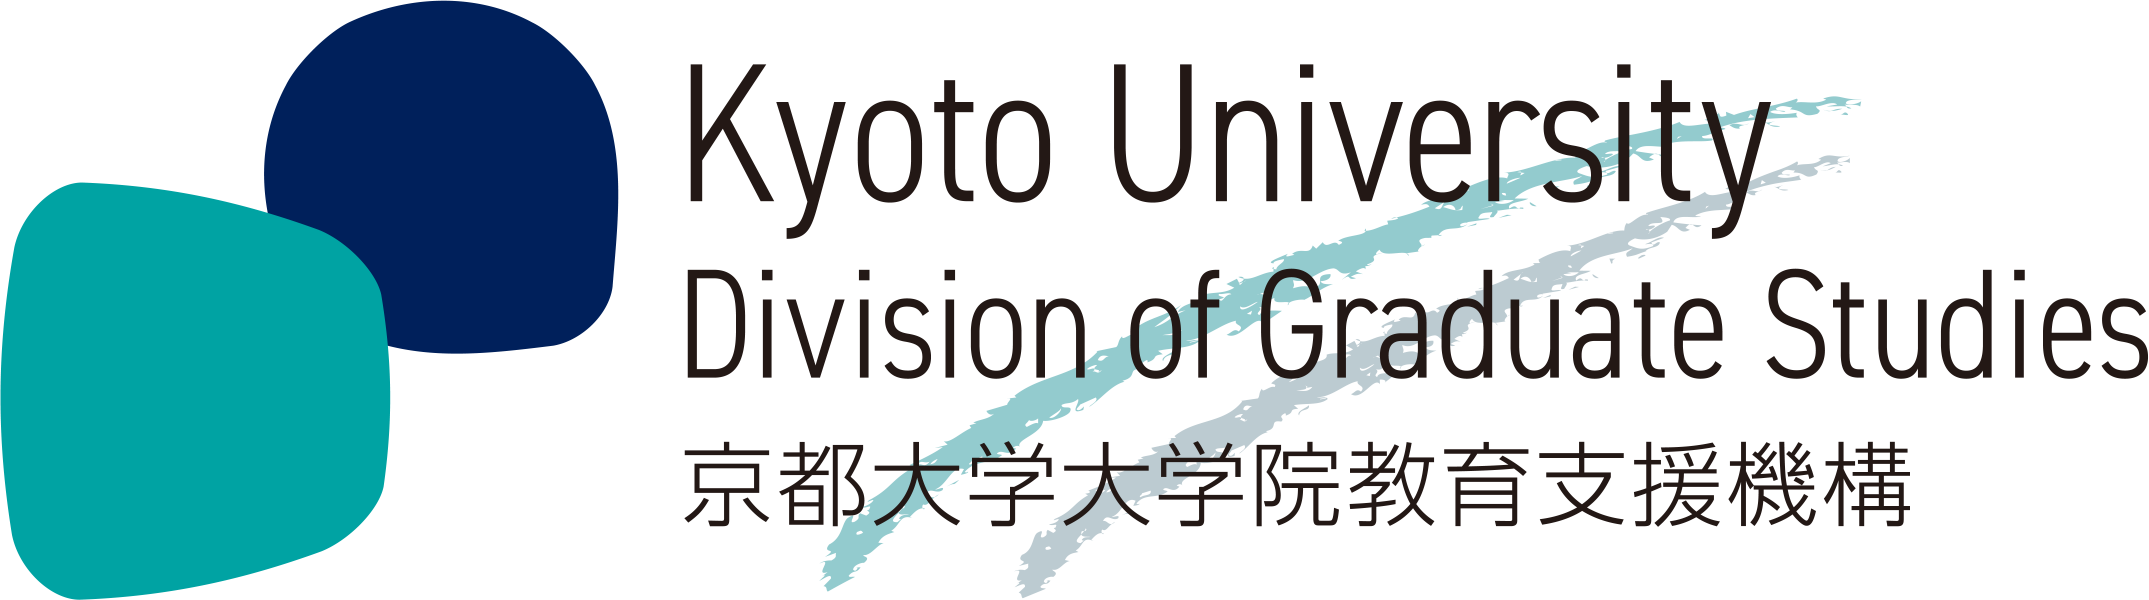 Kyoto University Division of Graduate Studies